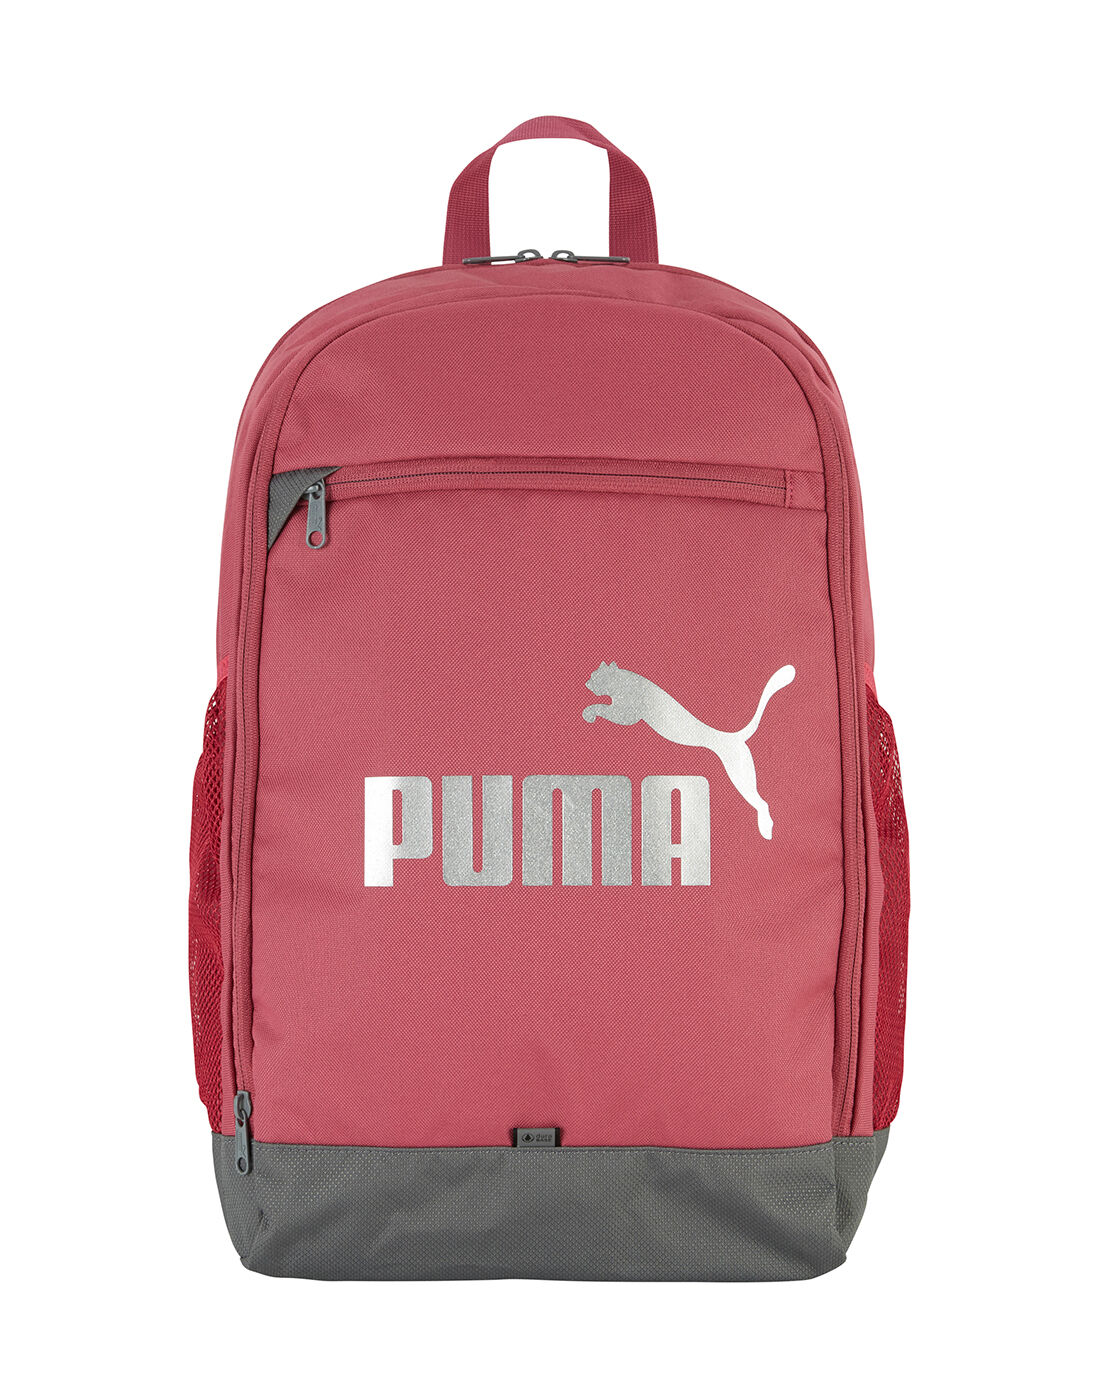 puma bags images